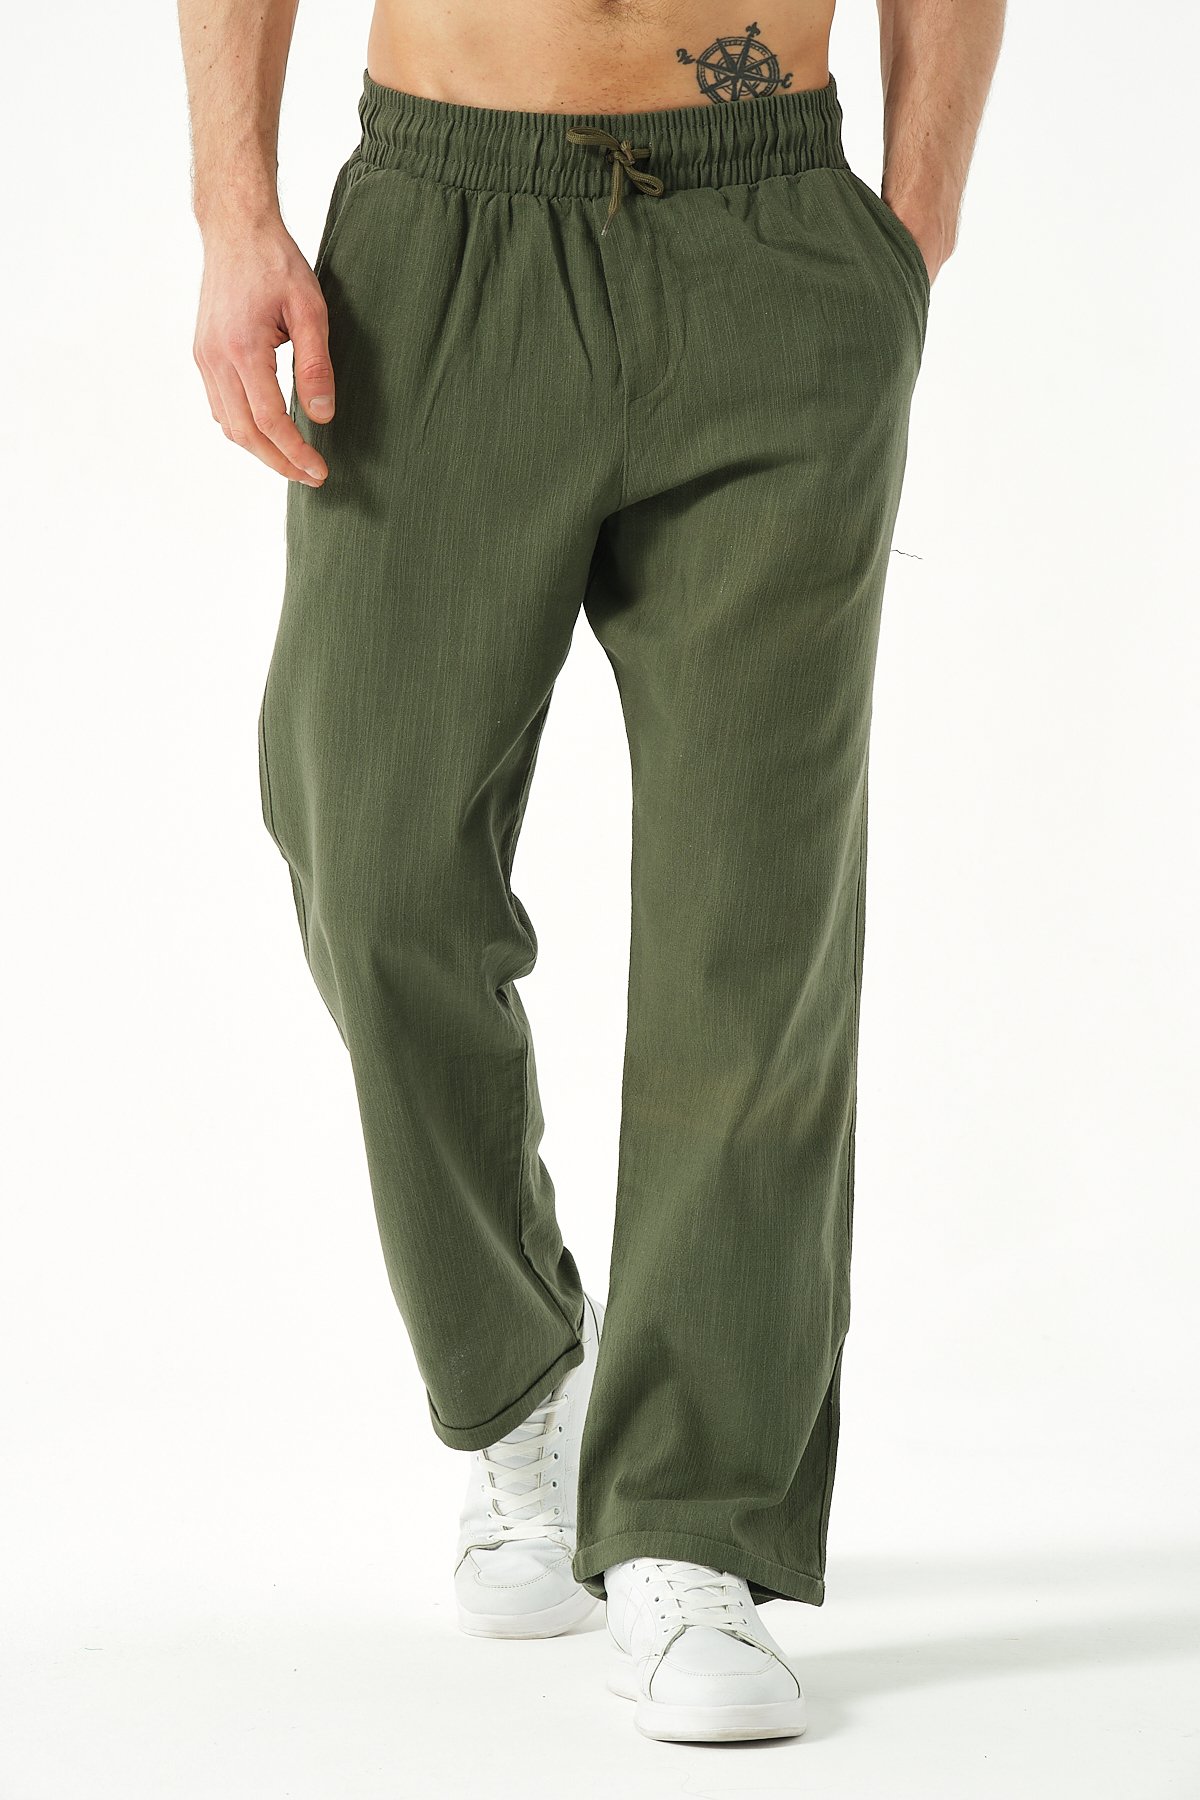 Keten Bol Paça Pantolon - Yeşil